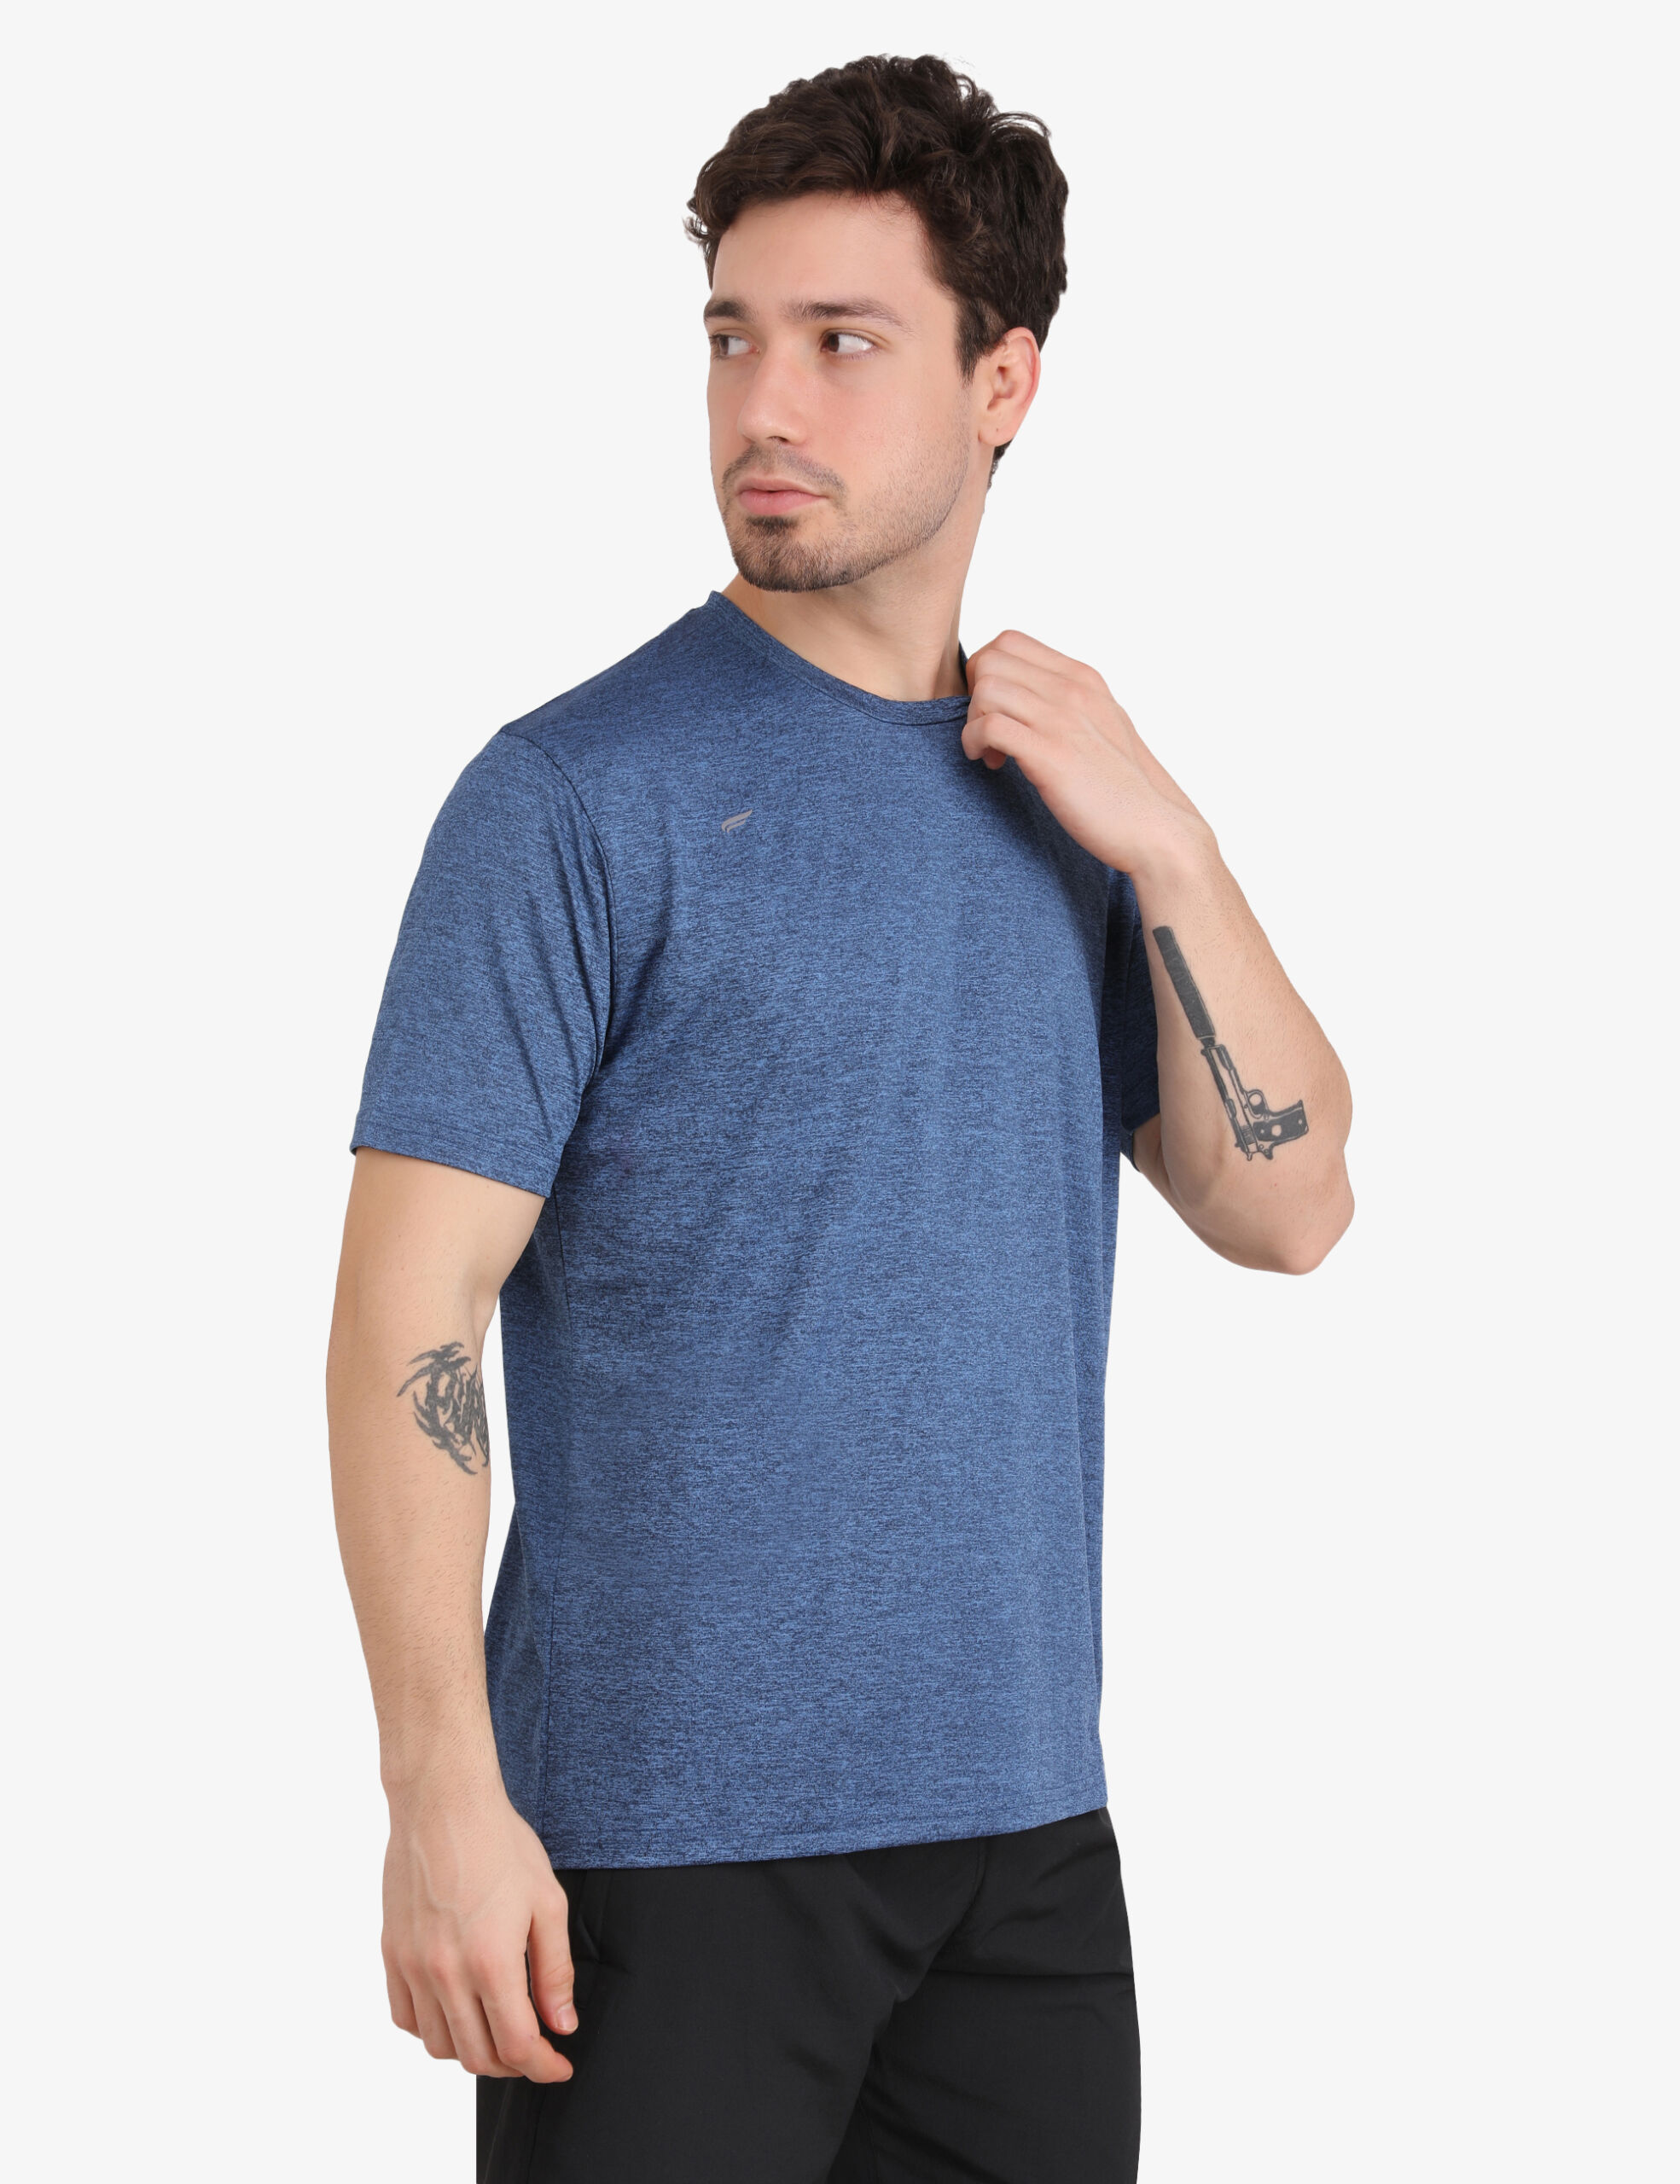 ASI All Rounder Royal Blue T-shirt for Men